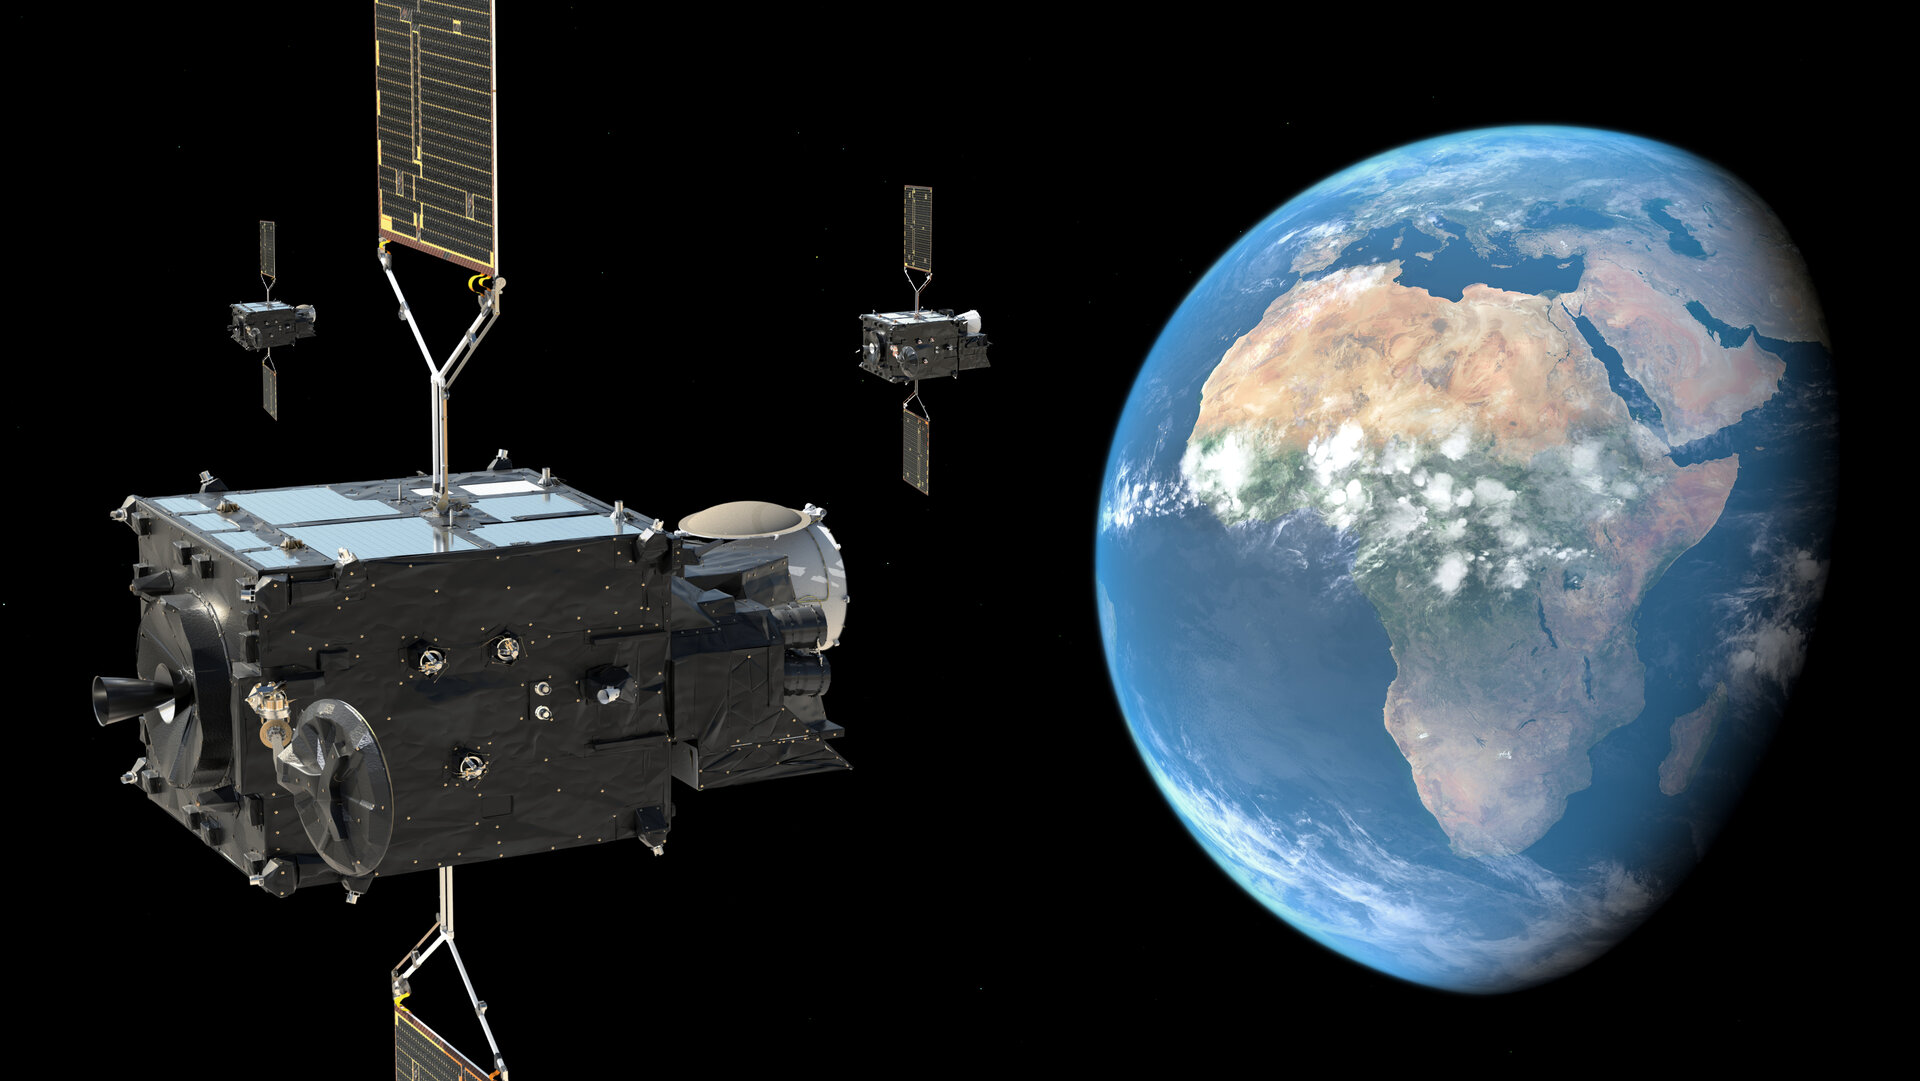 Meteosat Third Generation weather satellites pillars